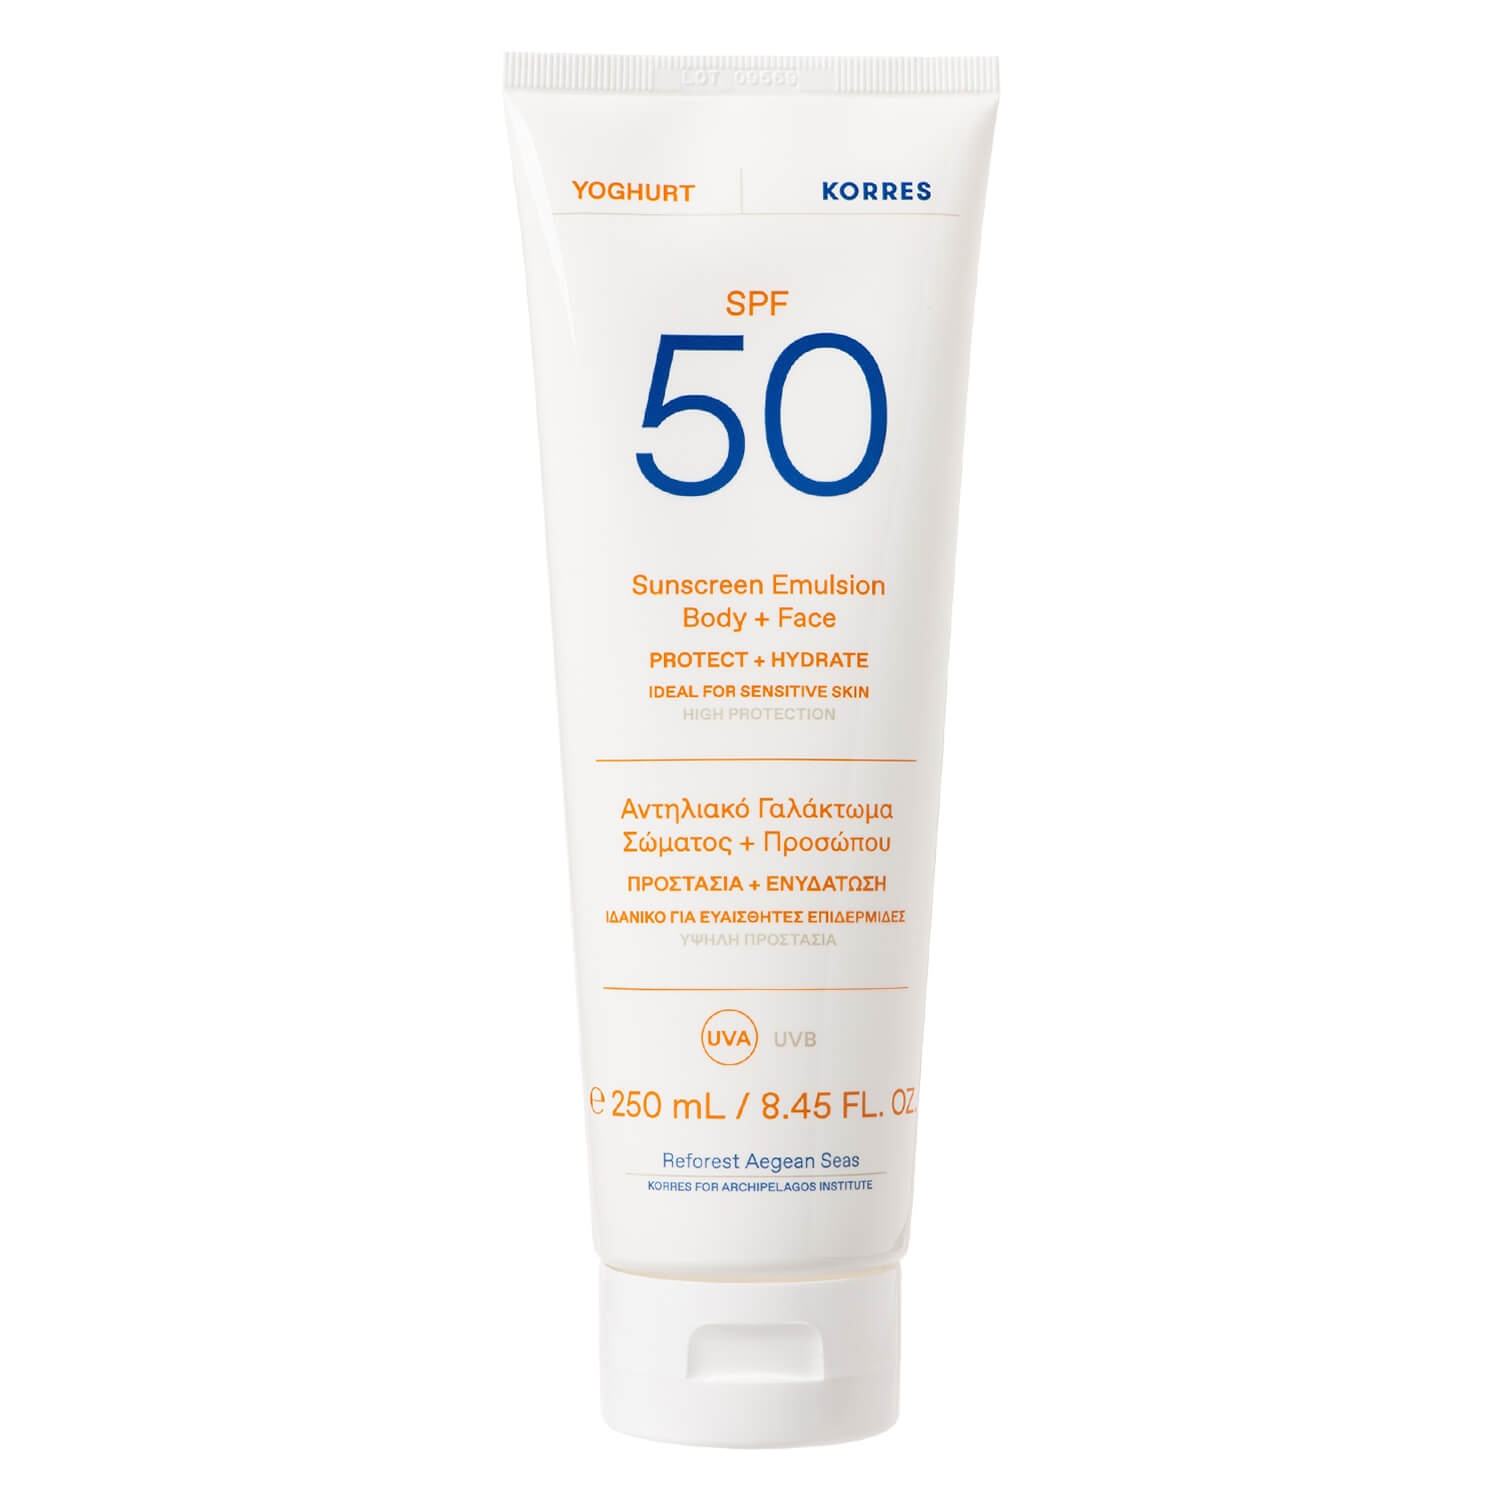 Image du produit de Korres Care - Yoghurt Sunscreen Emulsion Body + Face SPF50